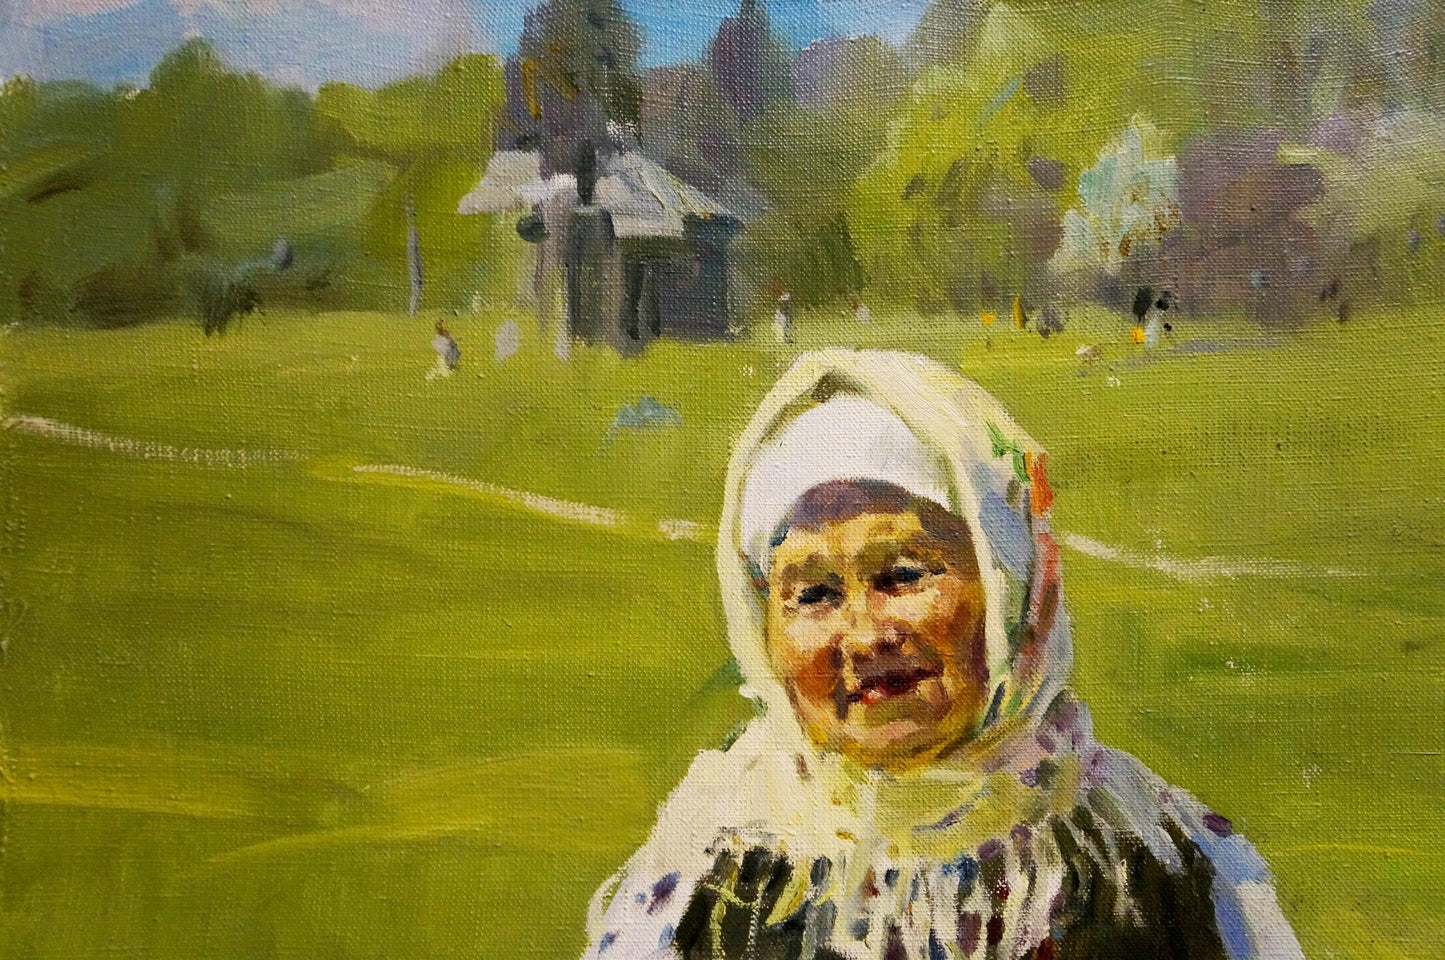 Oil artwork by Arkady Vasilievich Soroka capturing the essence of a grandmother